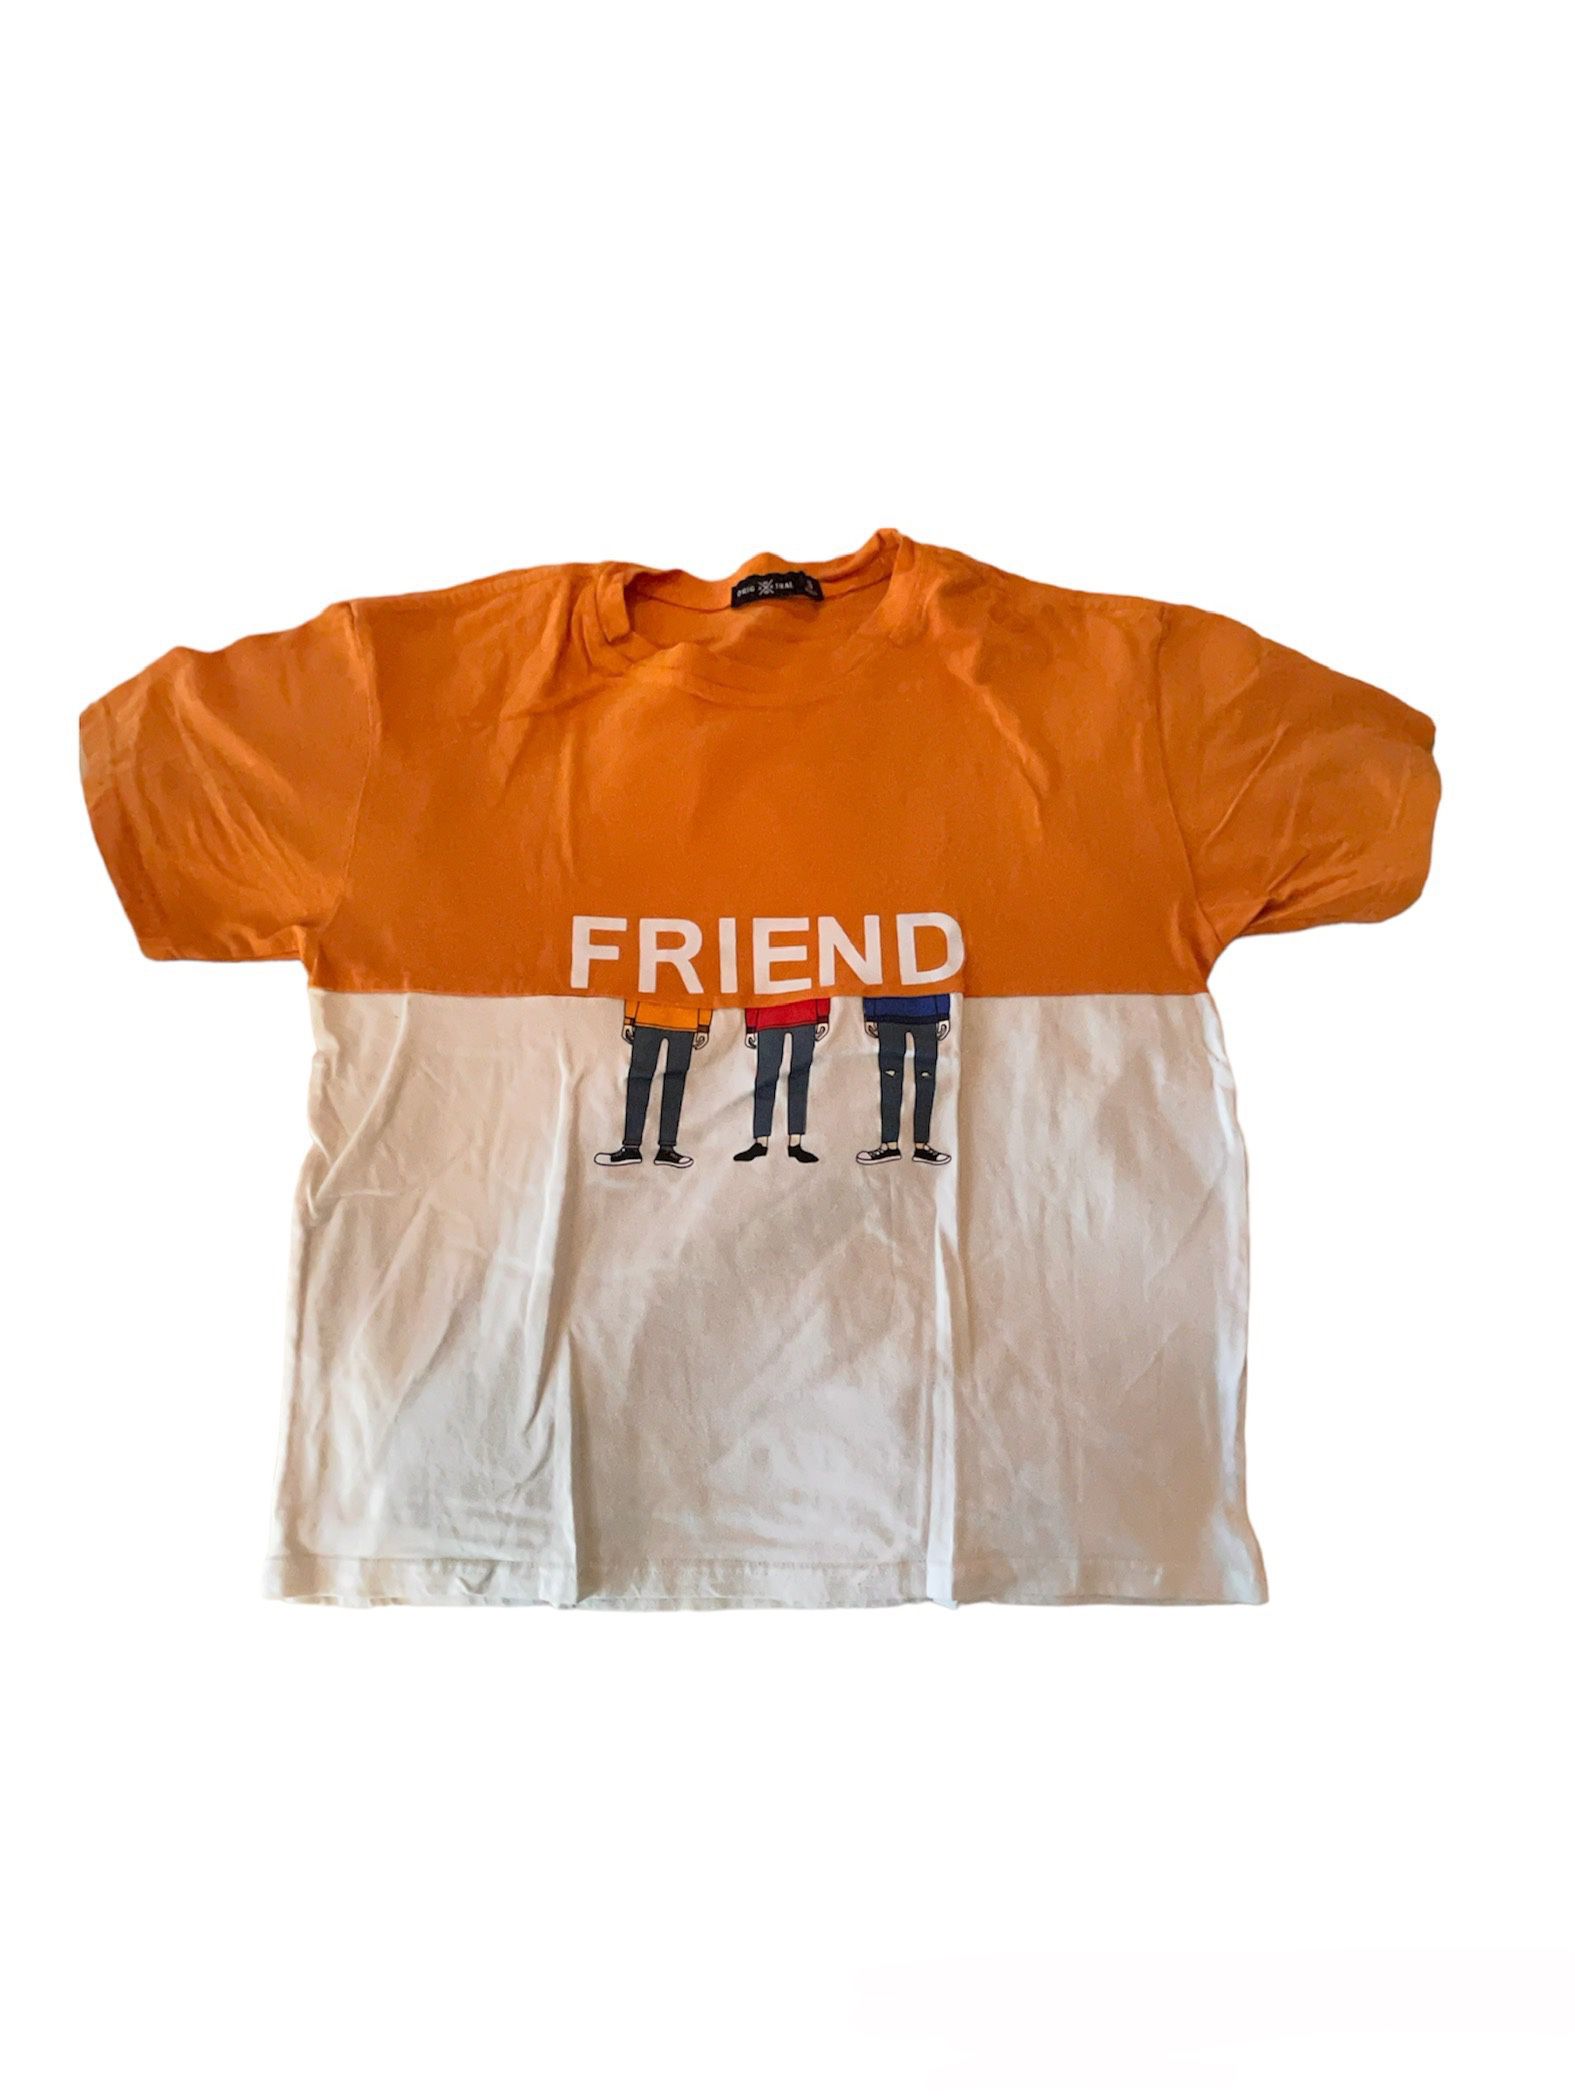 Small/Medium Divided Half Orange Half White Friend Shirt